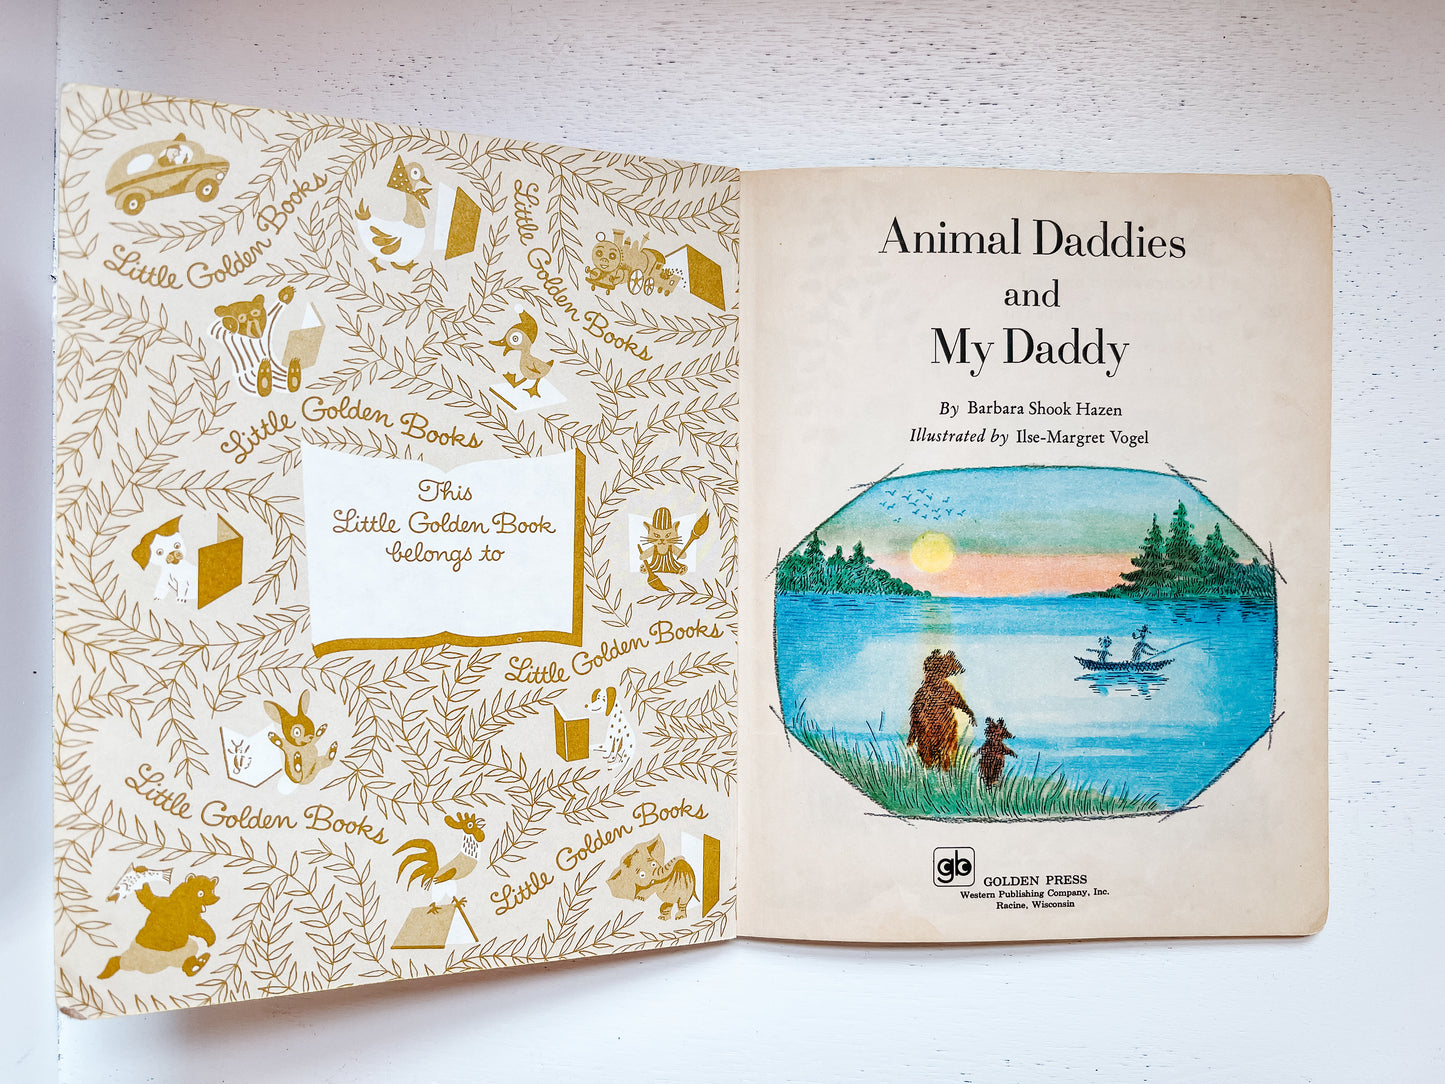 Little Golden Book “Animal Daddies and My Daddy”